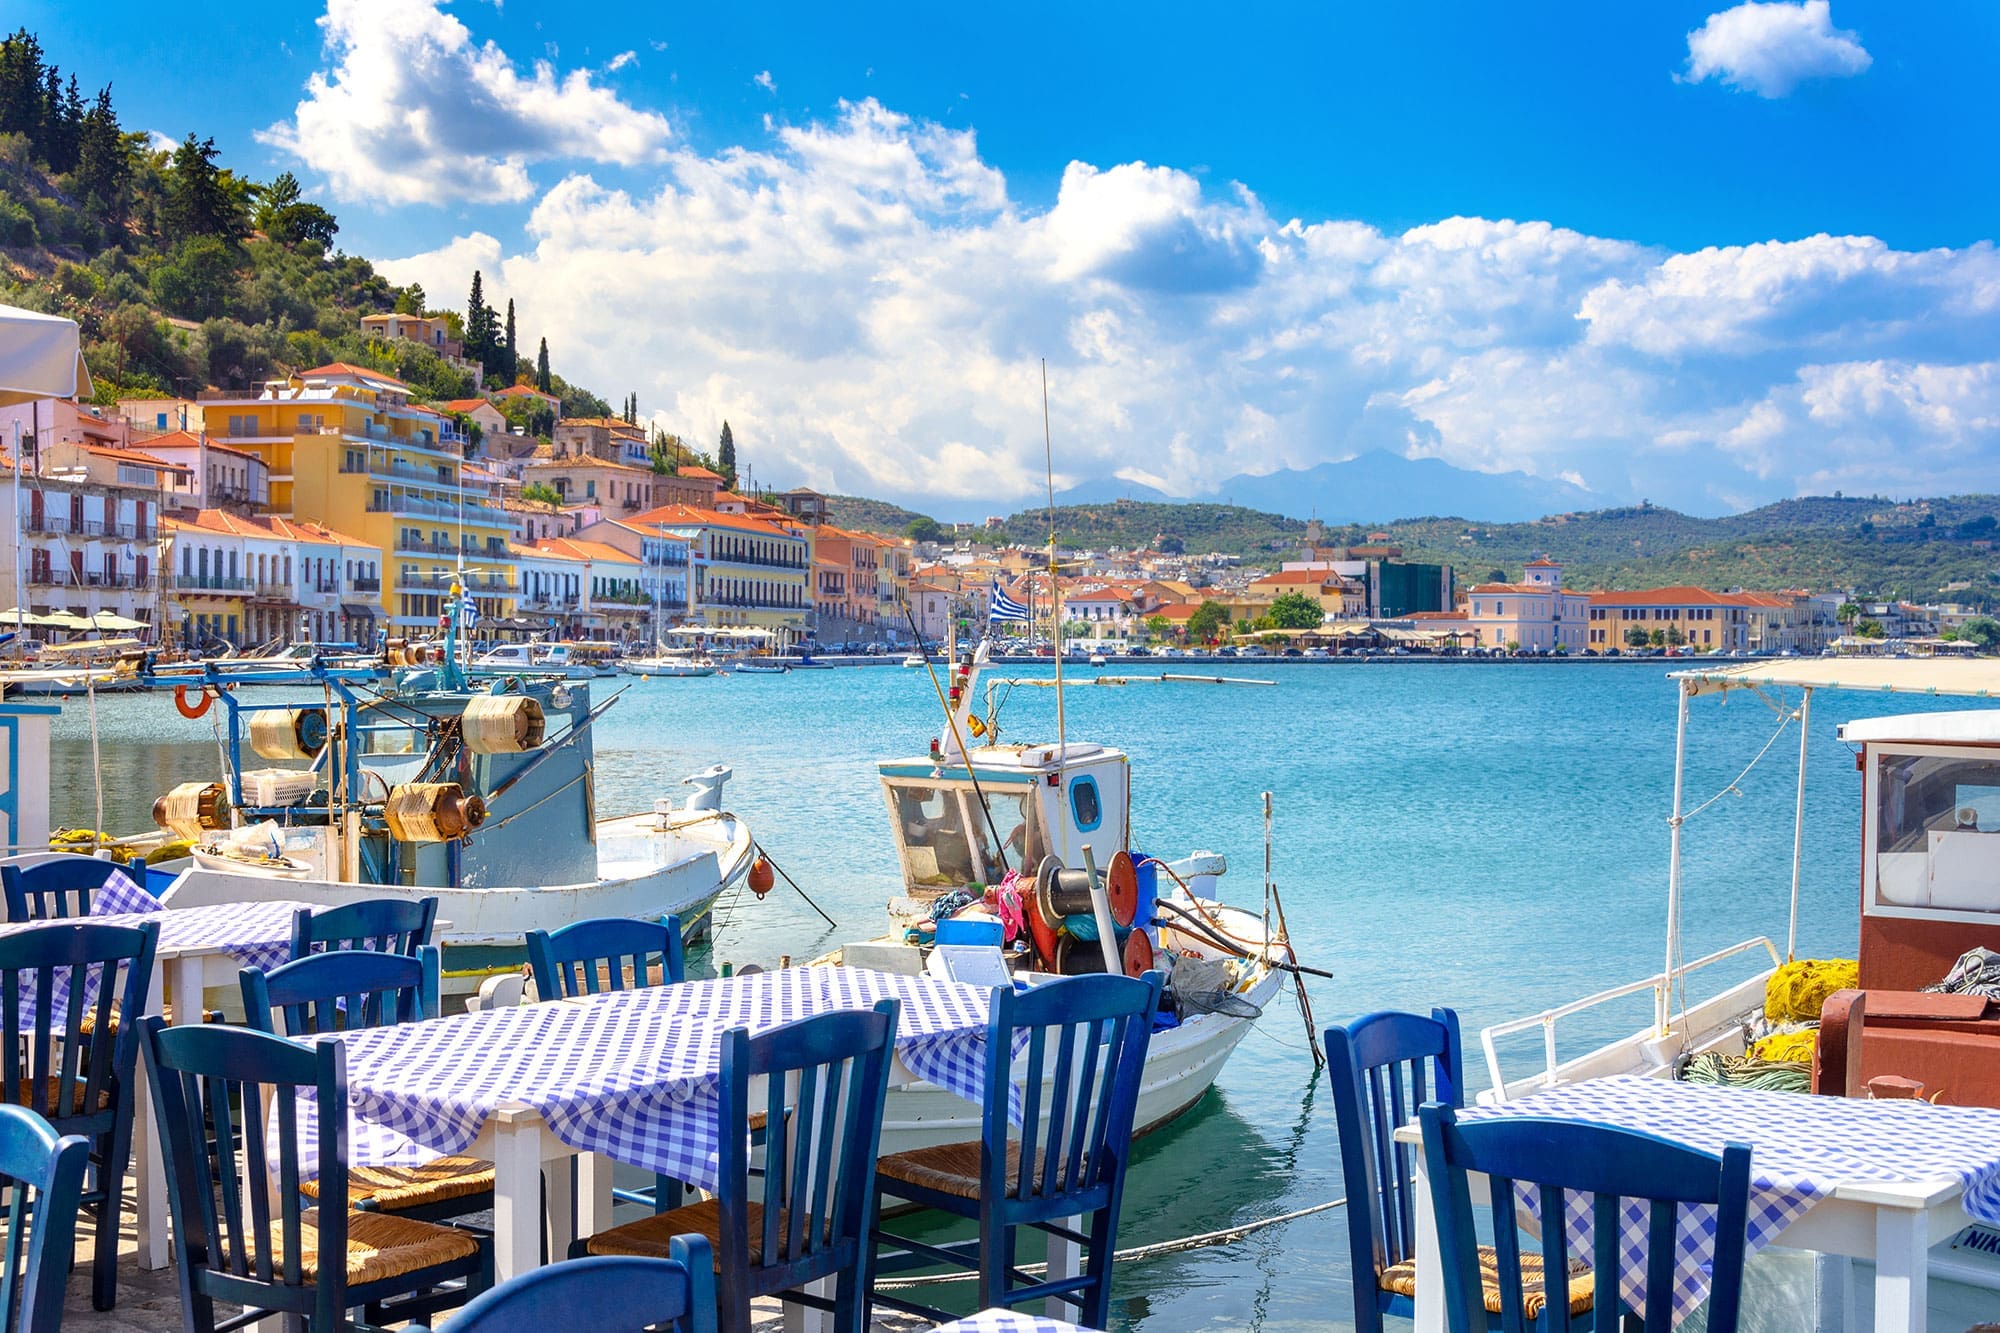 tour greece travel agency